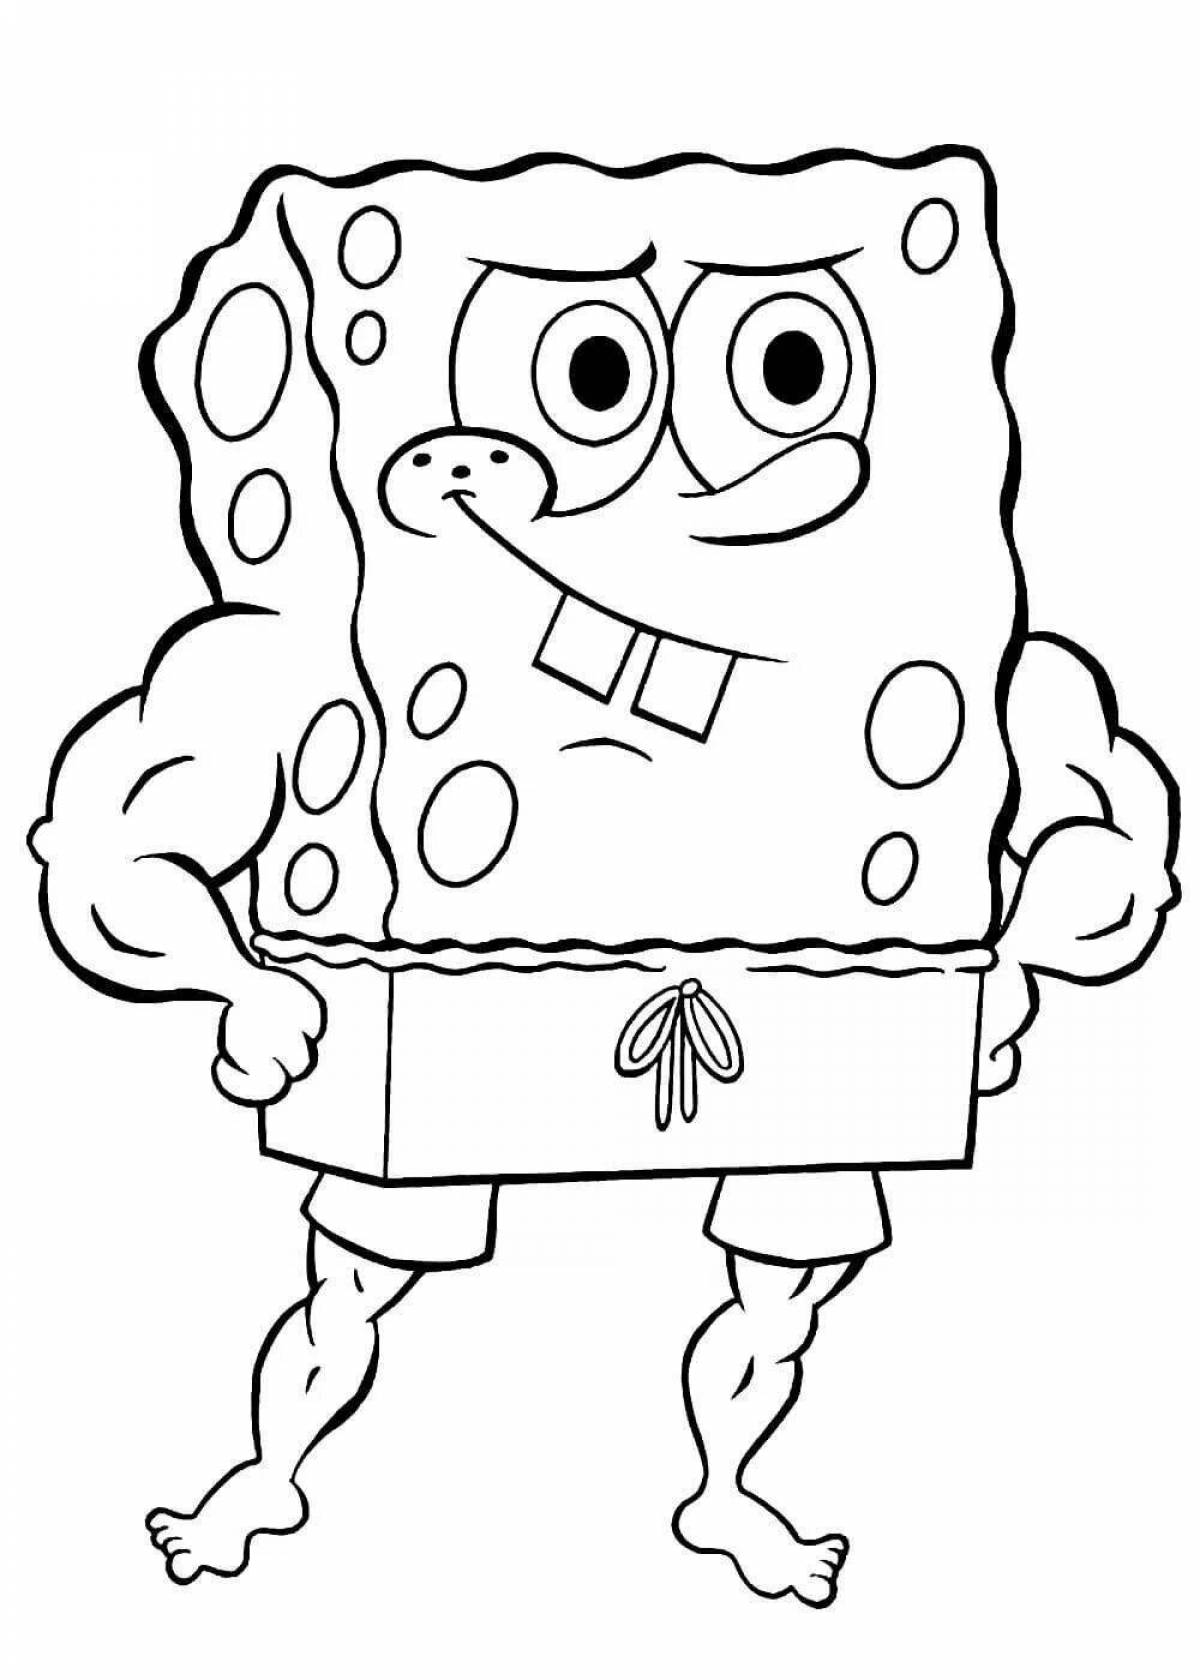 Adorable spongebob coloring book for kids